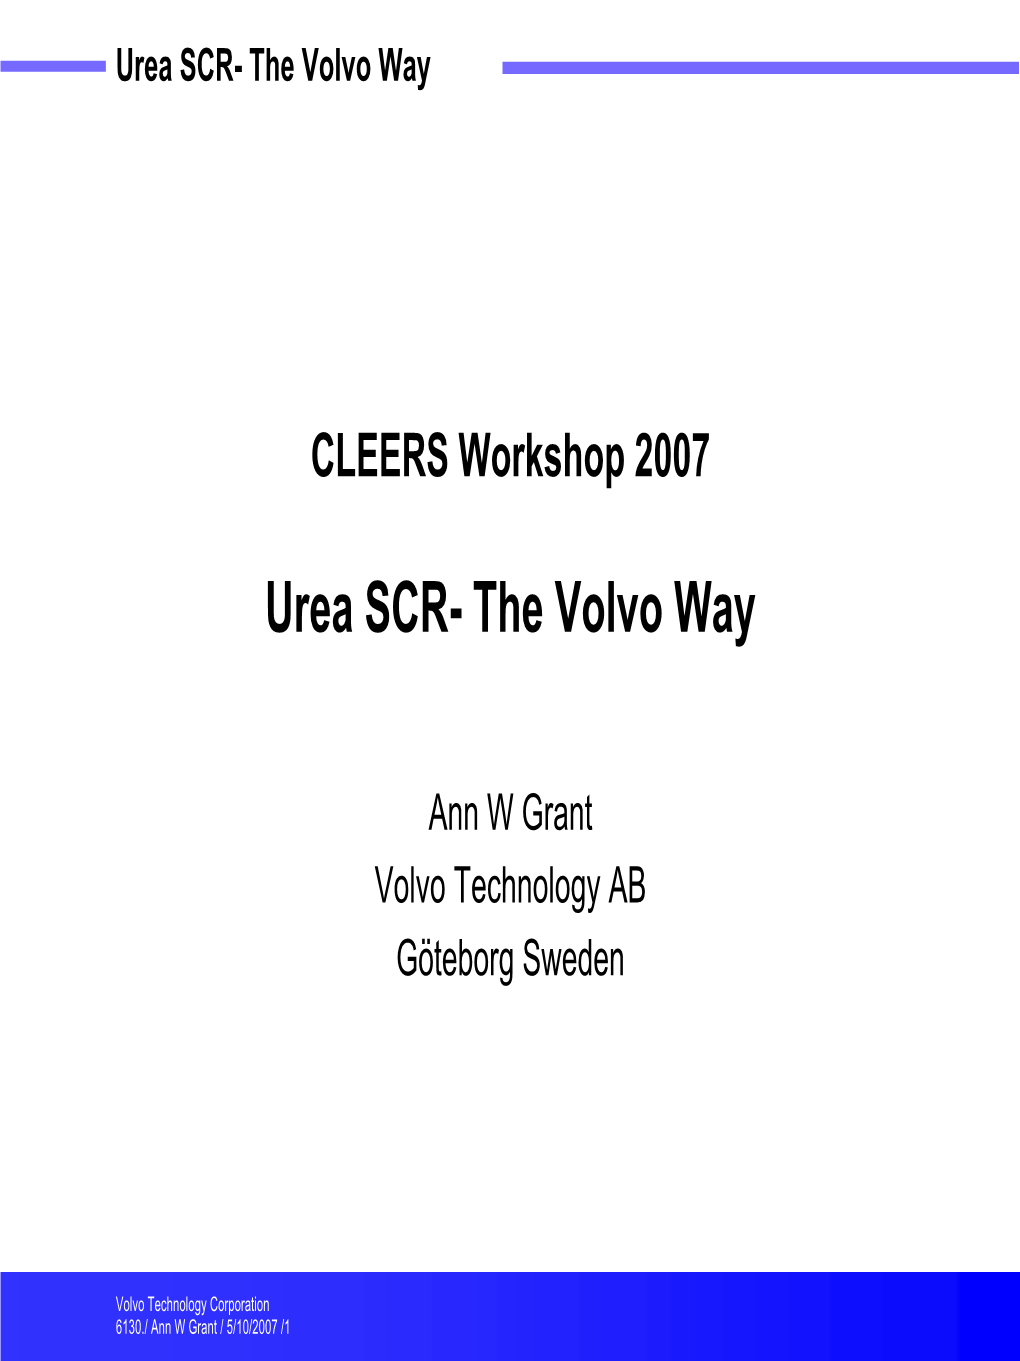 Urea SCR- the Volvo Way